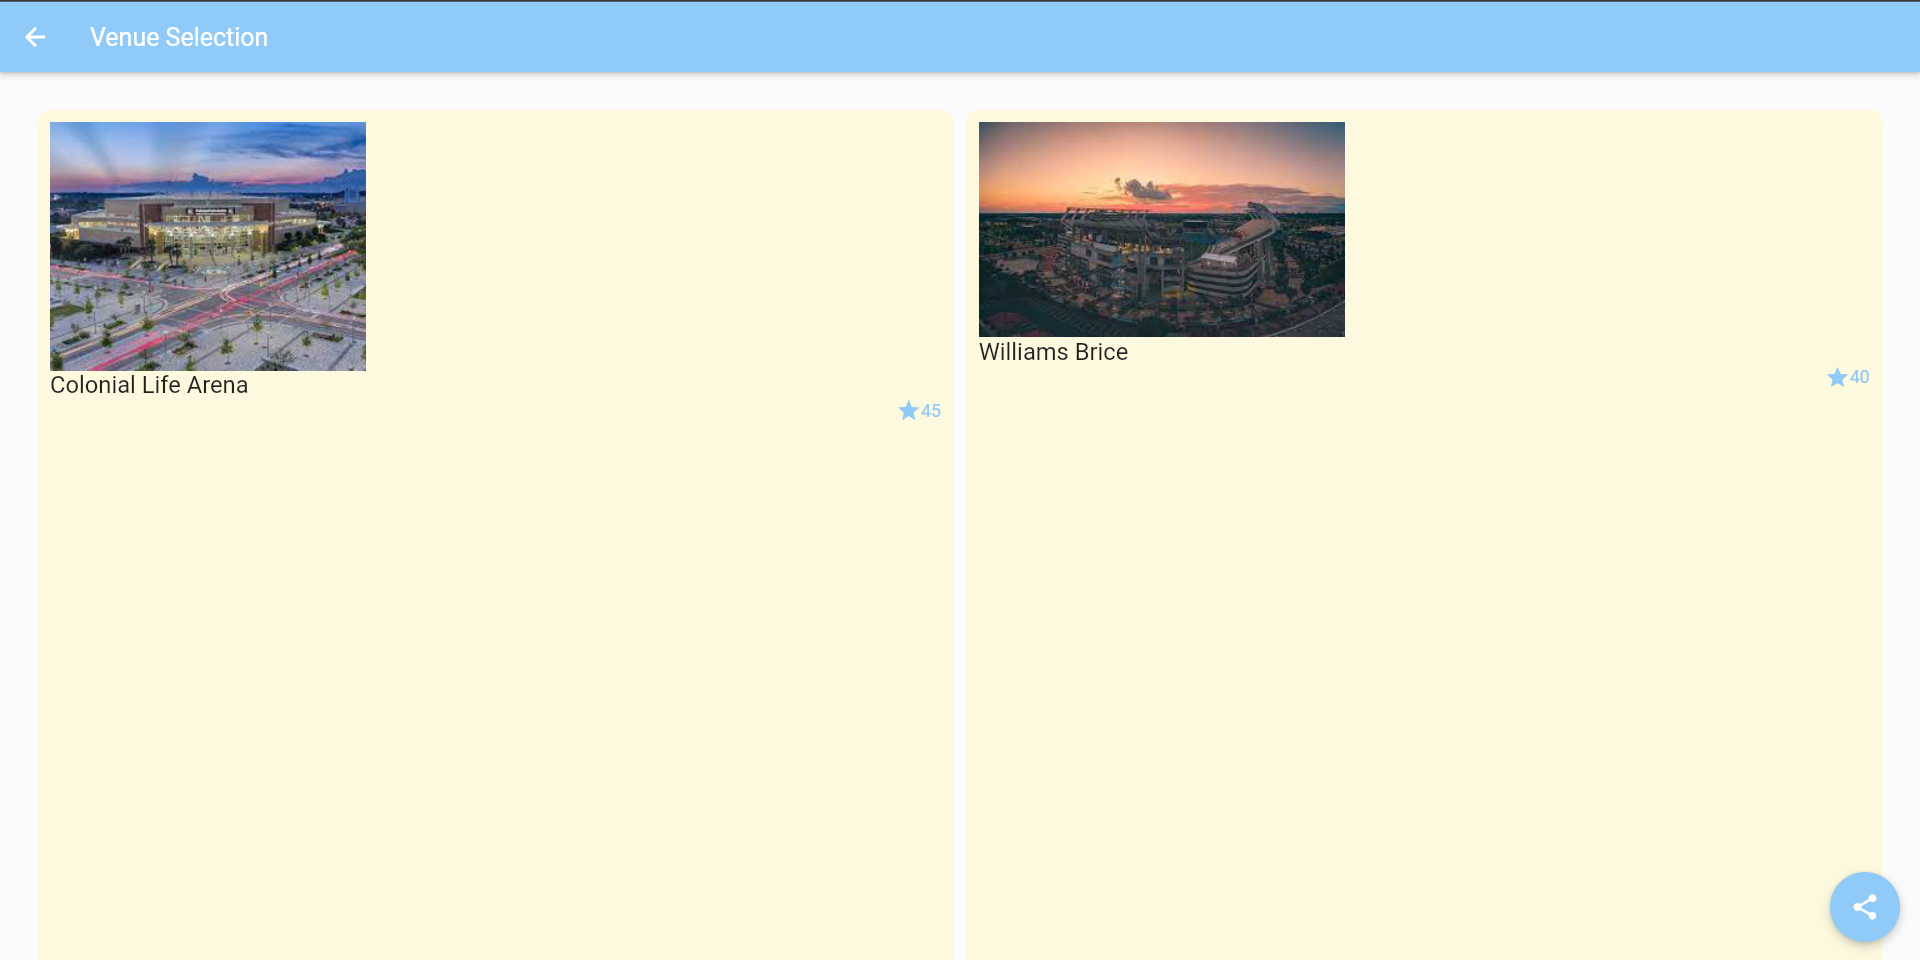 Screenshot 1: Venue Selection screen 